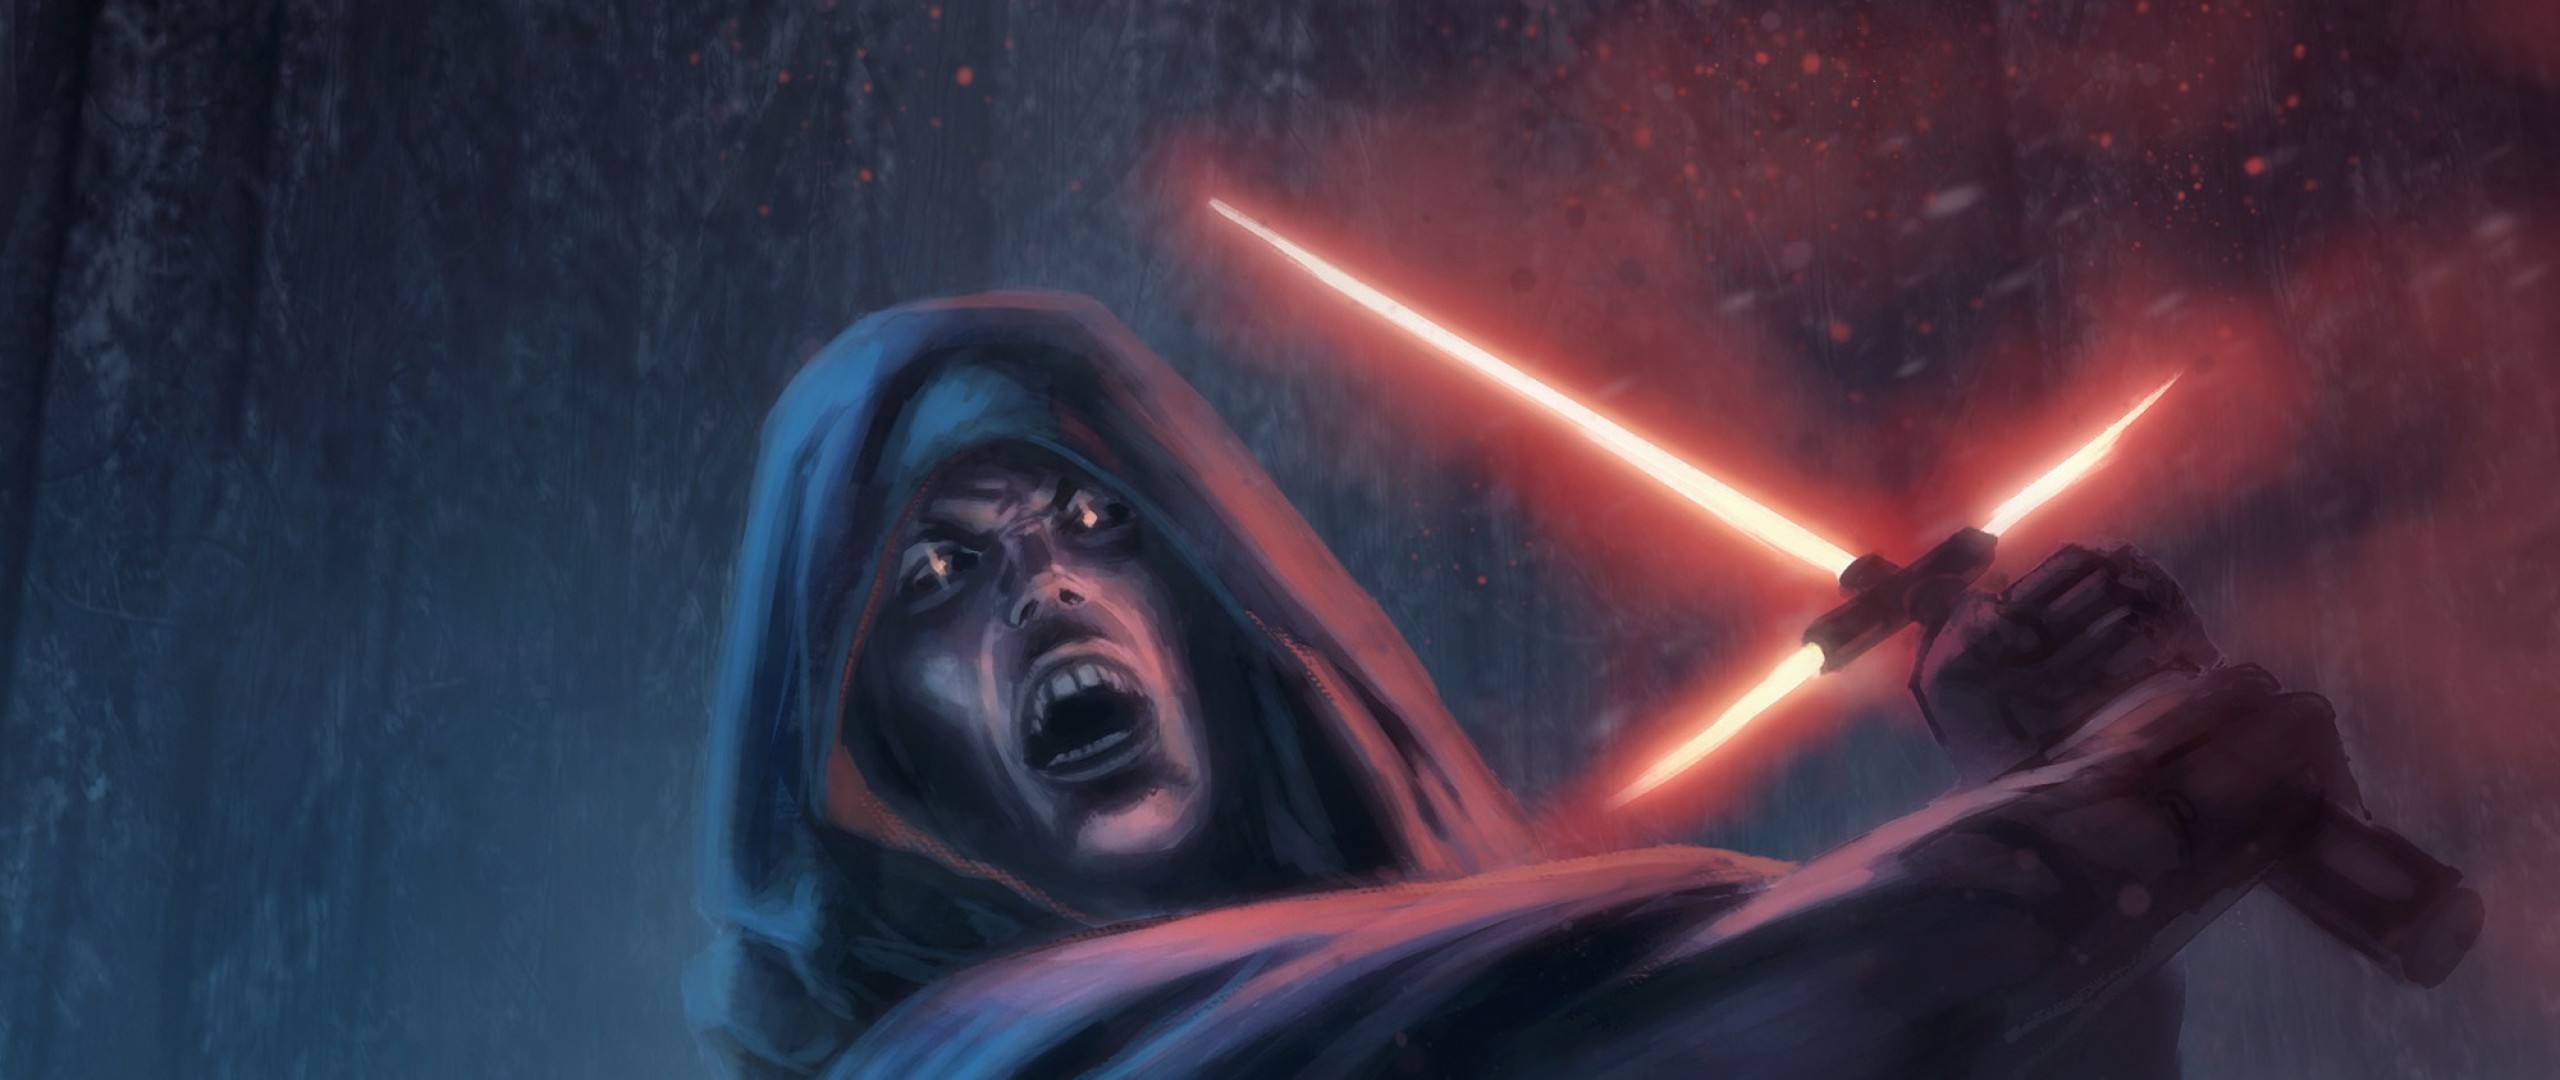 2560x1080  Wallpaper star wars episode vii - the force awakens, sith,  lightsaber